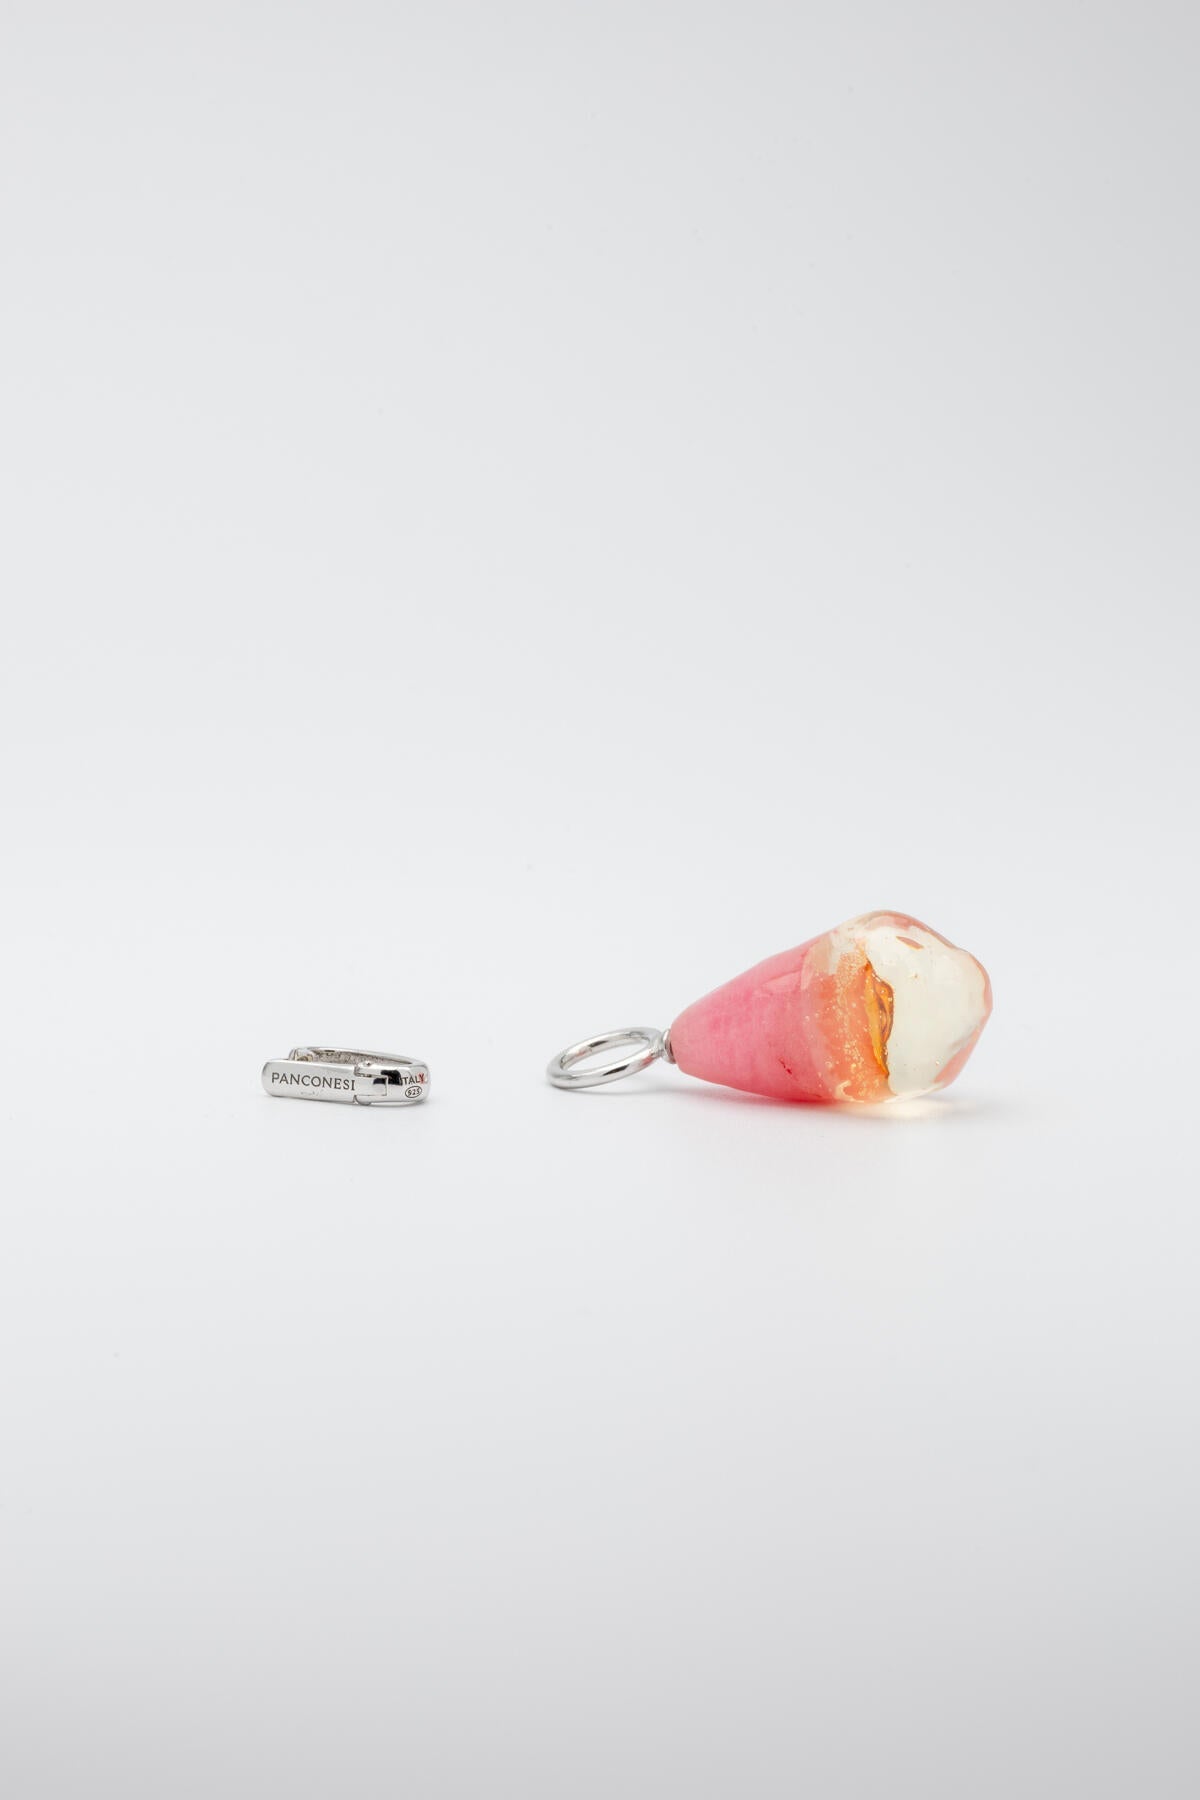 B213_Talisman Hybrid Stone Necklace - Pink_L_02